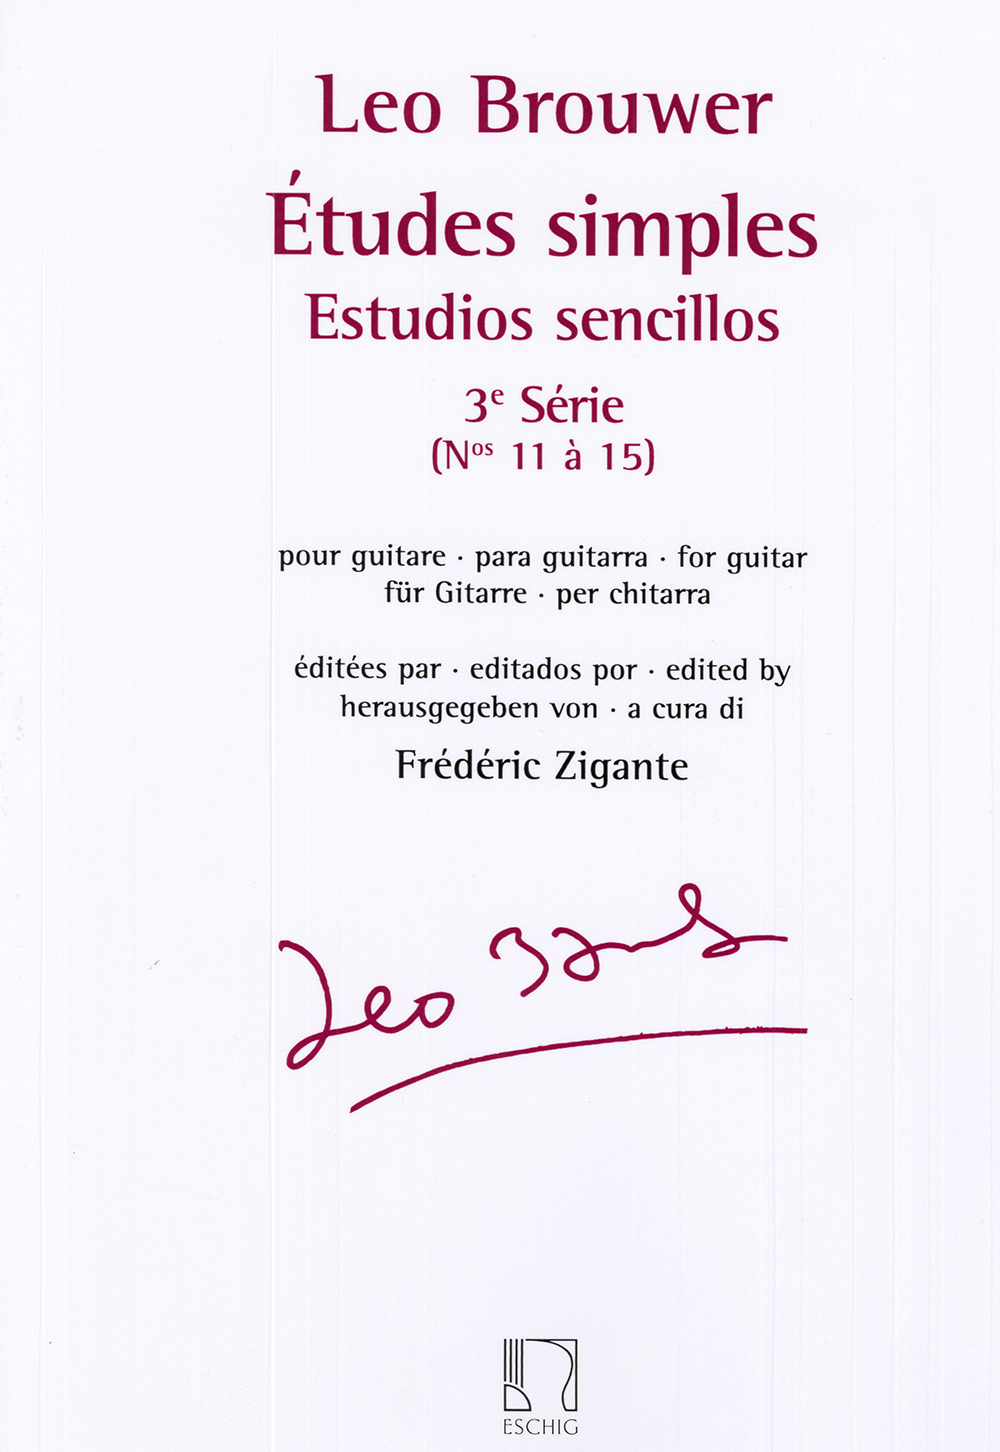 Brouwer Estudios Sencillos Etudes Simples Serie 3 Sheet Music Songbook